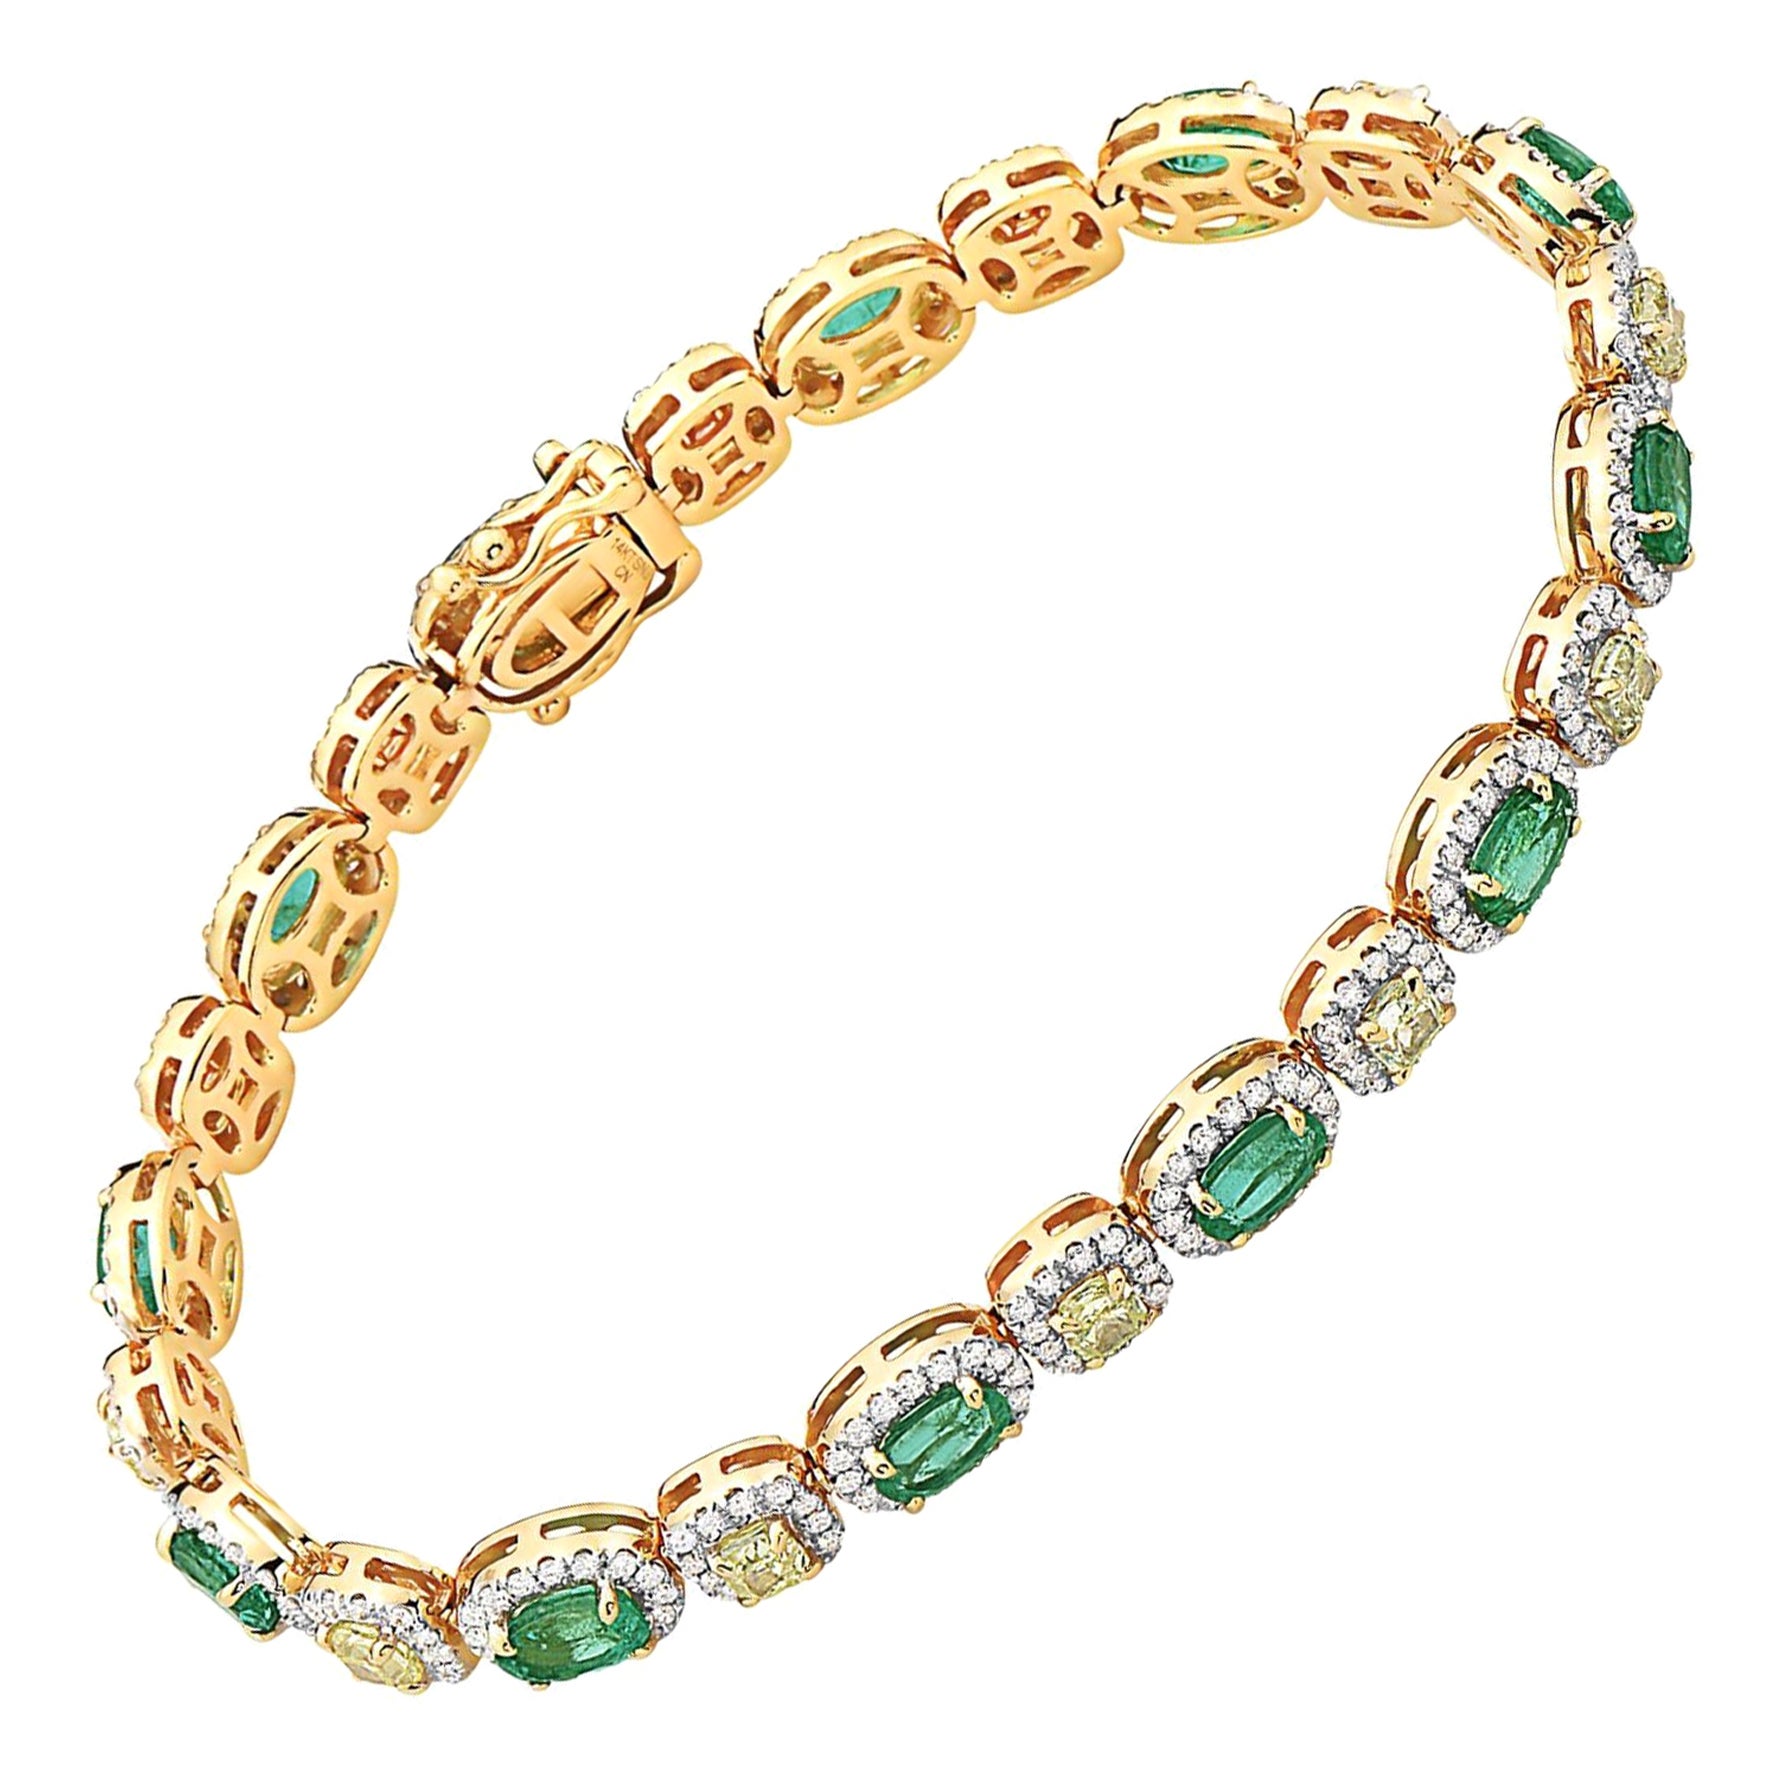 IGI Certified 4.50 Carat Emerald Bracelet with Yellow & White Diamonds in 14K For Sale